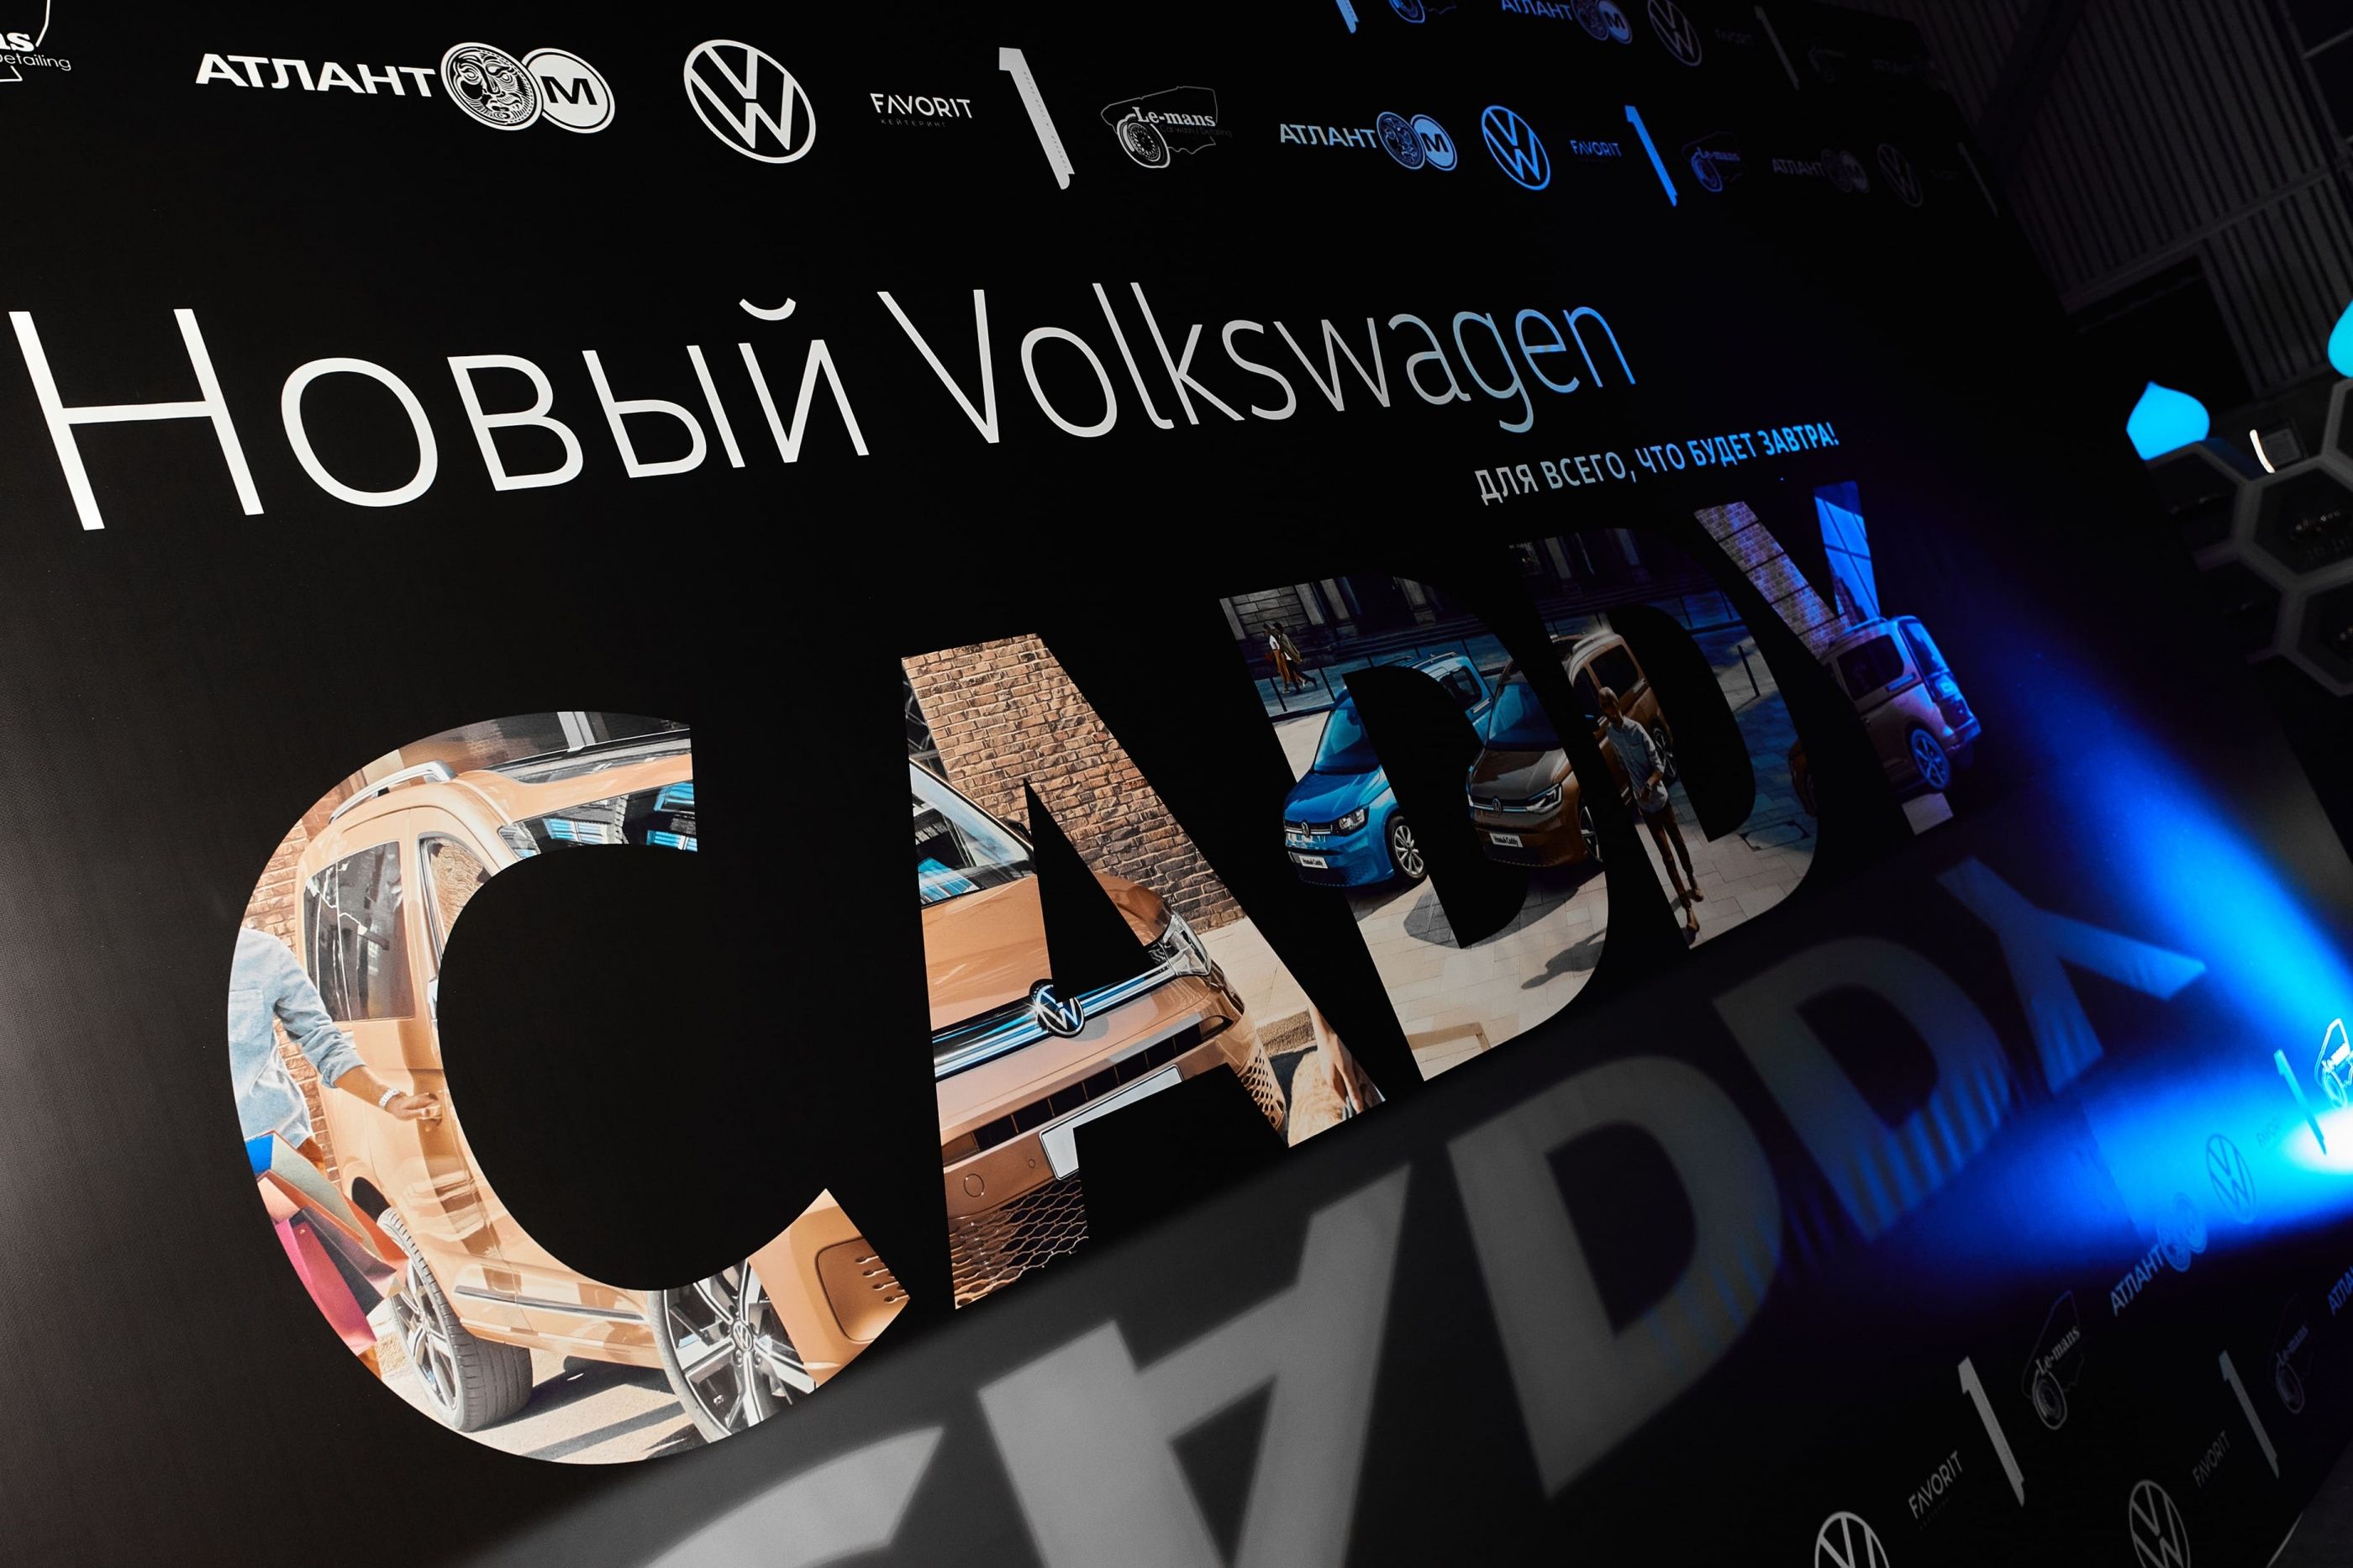 В Минске прошла презентация нового Volkswagen Caddy5